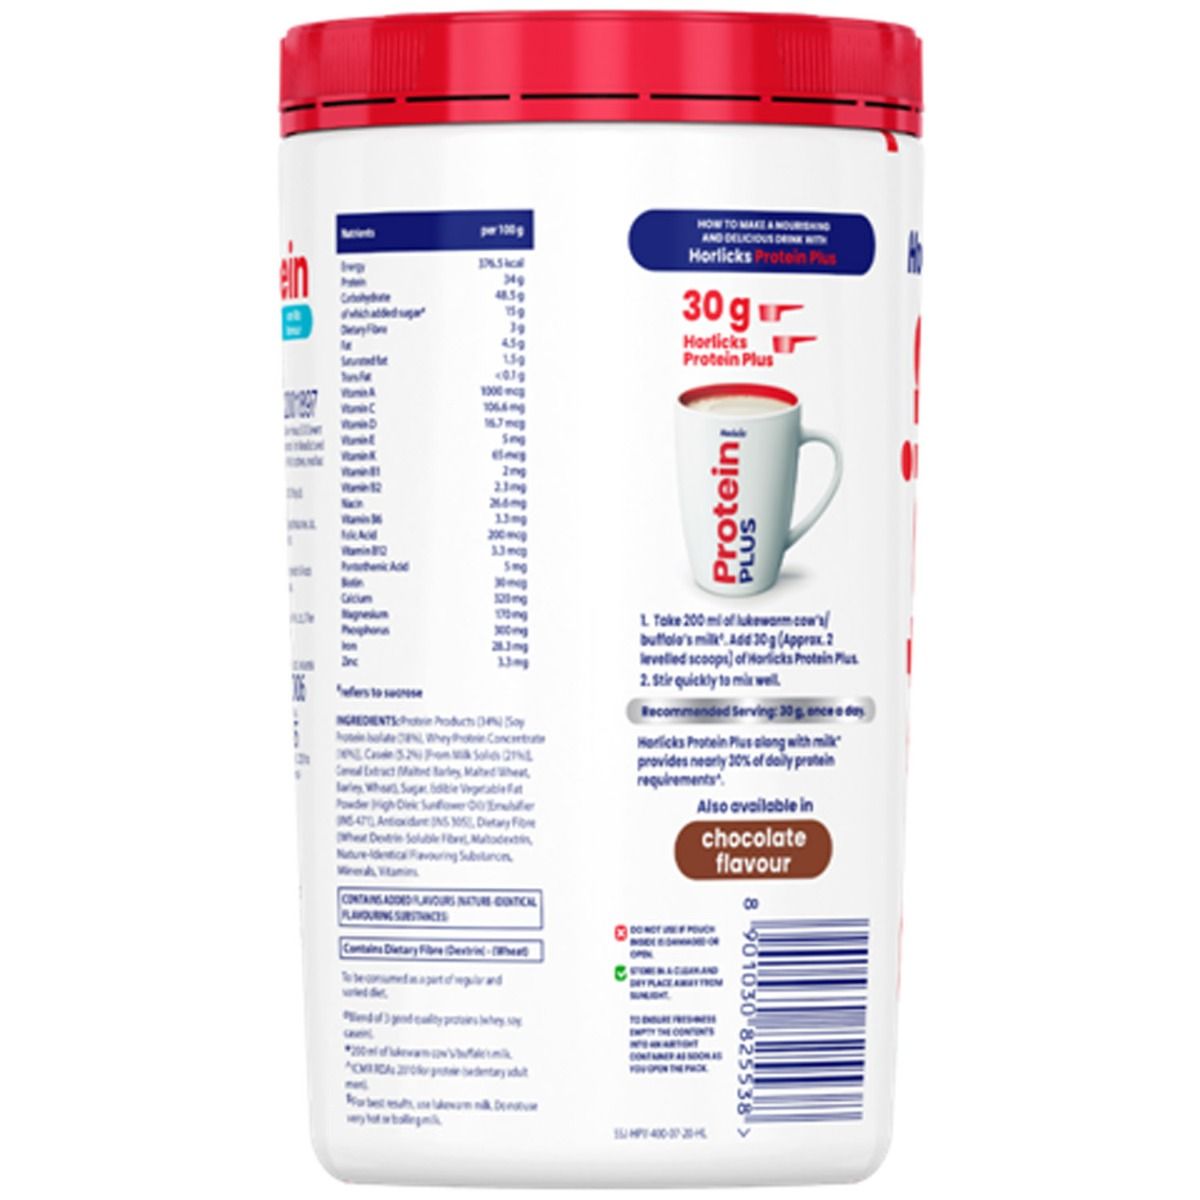 Horlicks Protein+ Vanilla Flavoured Health and Nutrition Drink, 400 gm Jar, Pack of 1 